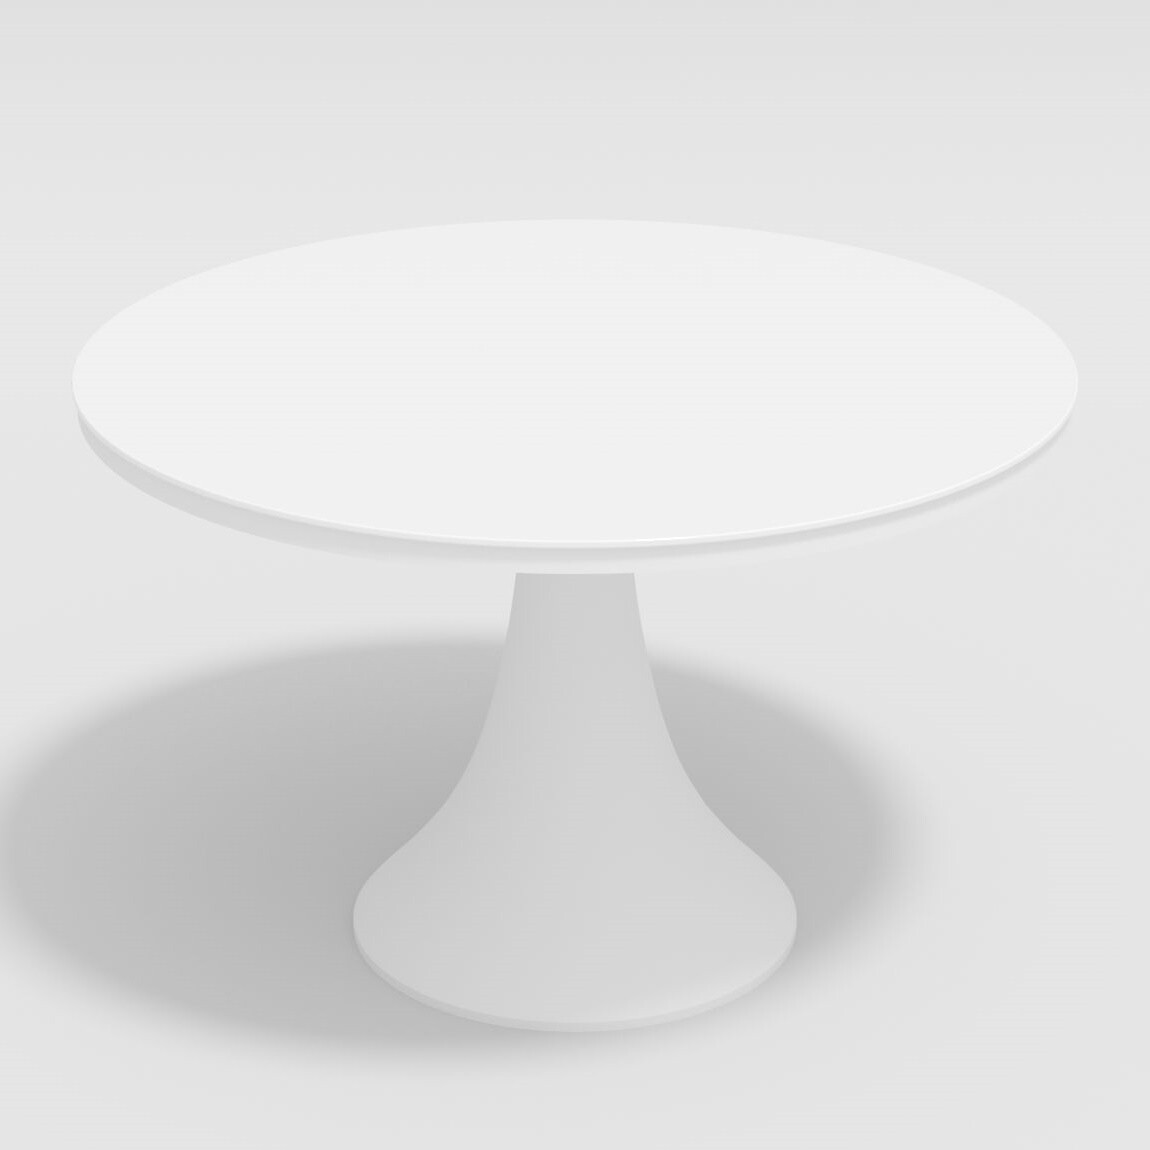 Обеденный стол круглый белый со стеклянной столешницей Voglie round